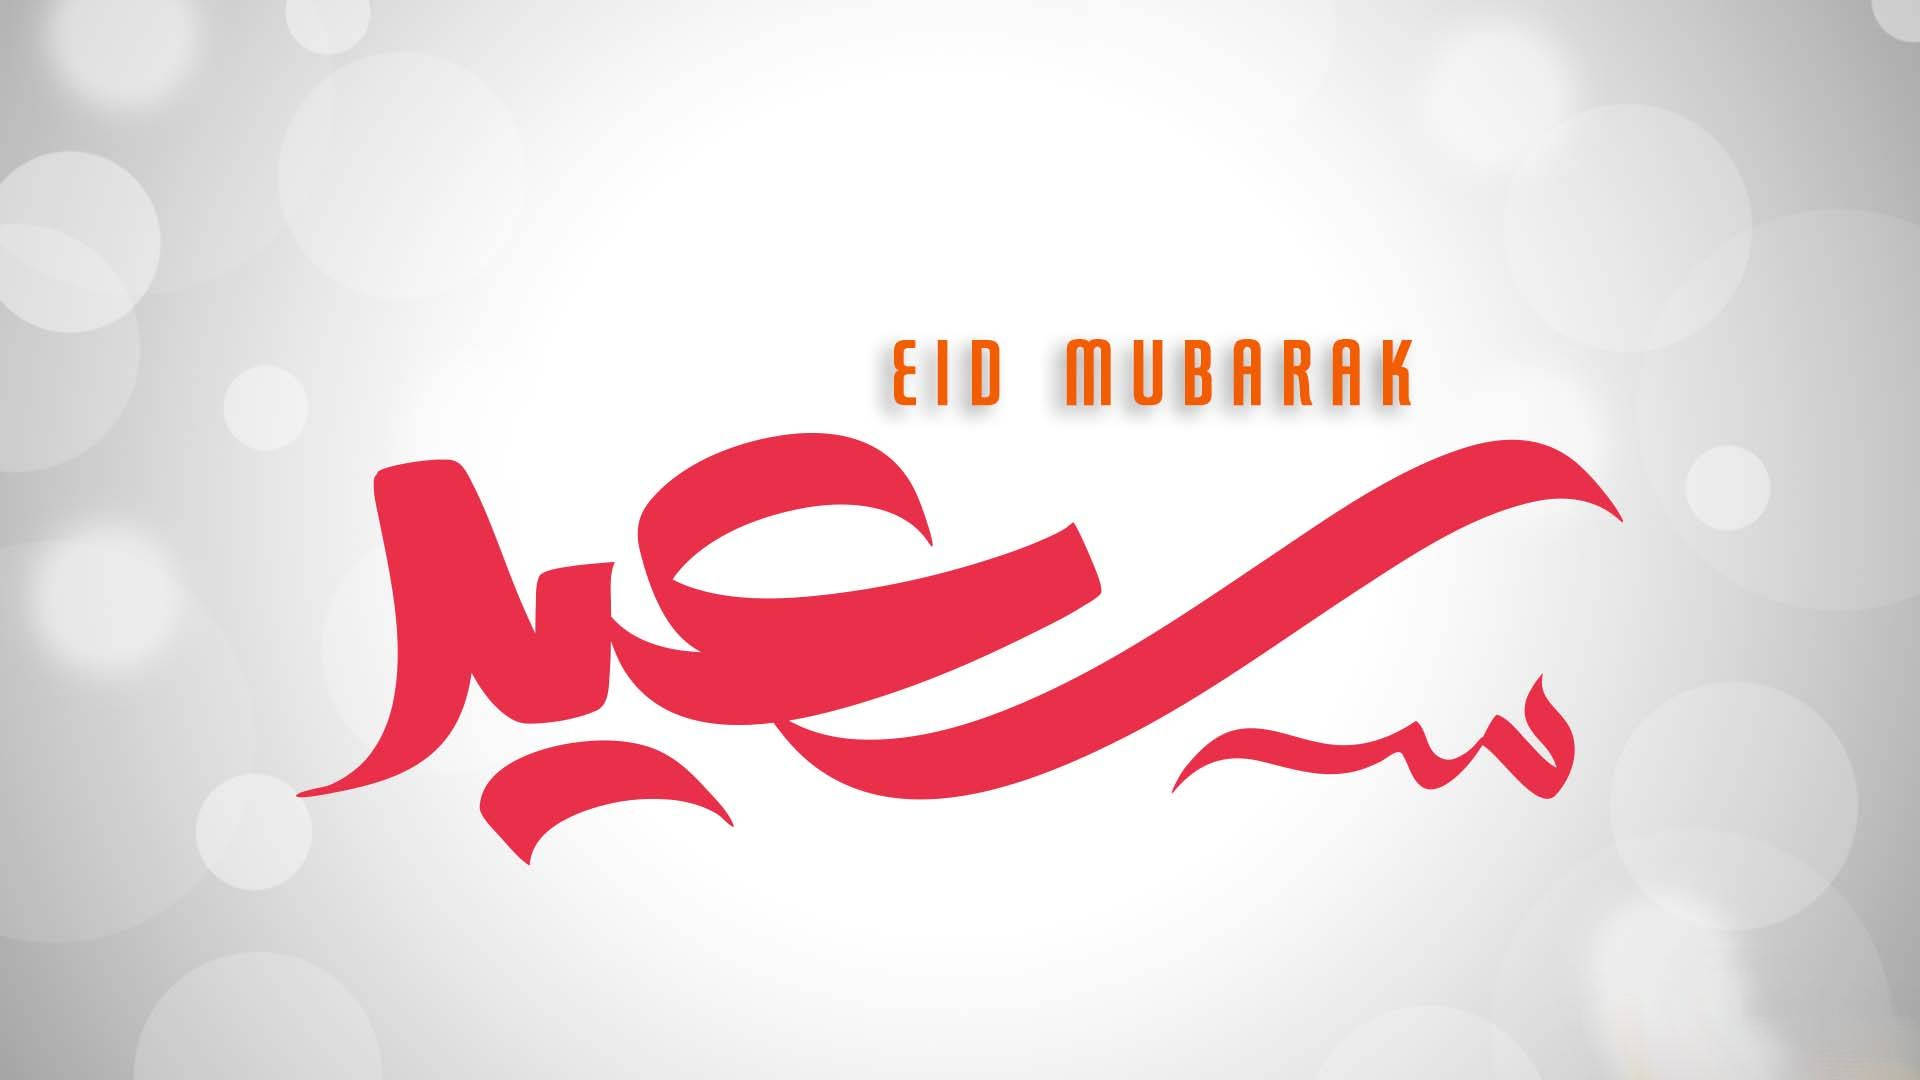 Caption: Celebrating Eid Mubarak - Stunning Evening Full Of Lights And Moon Wallpaper